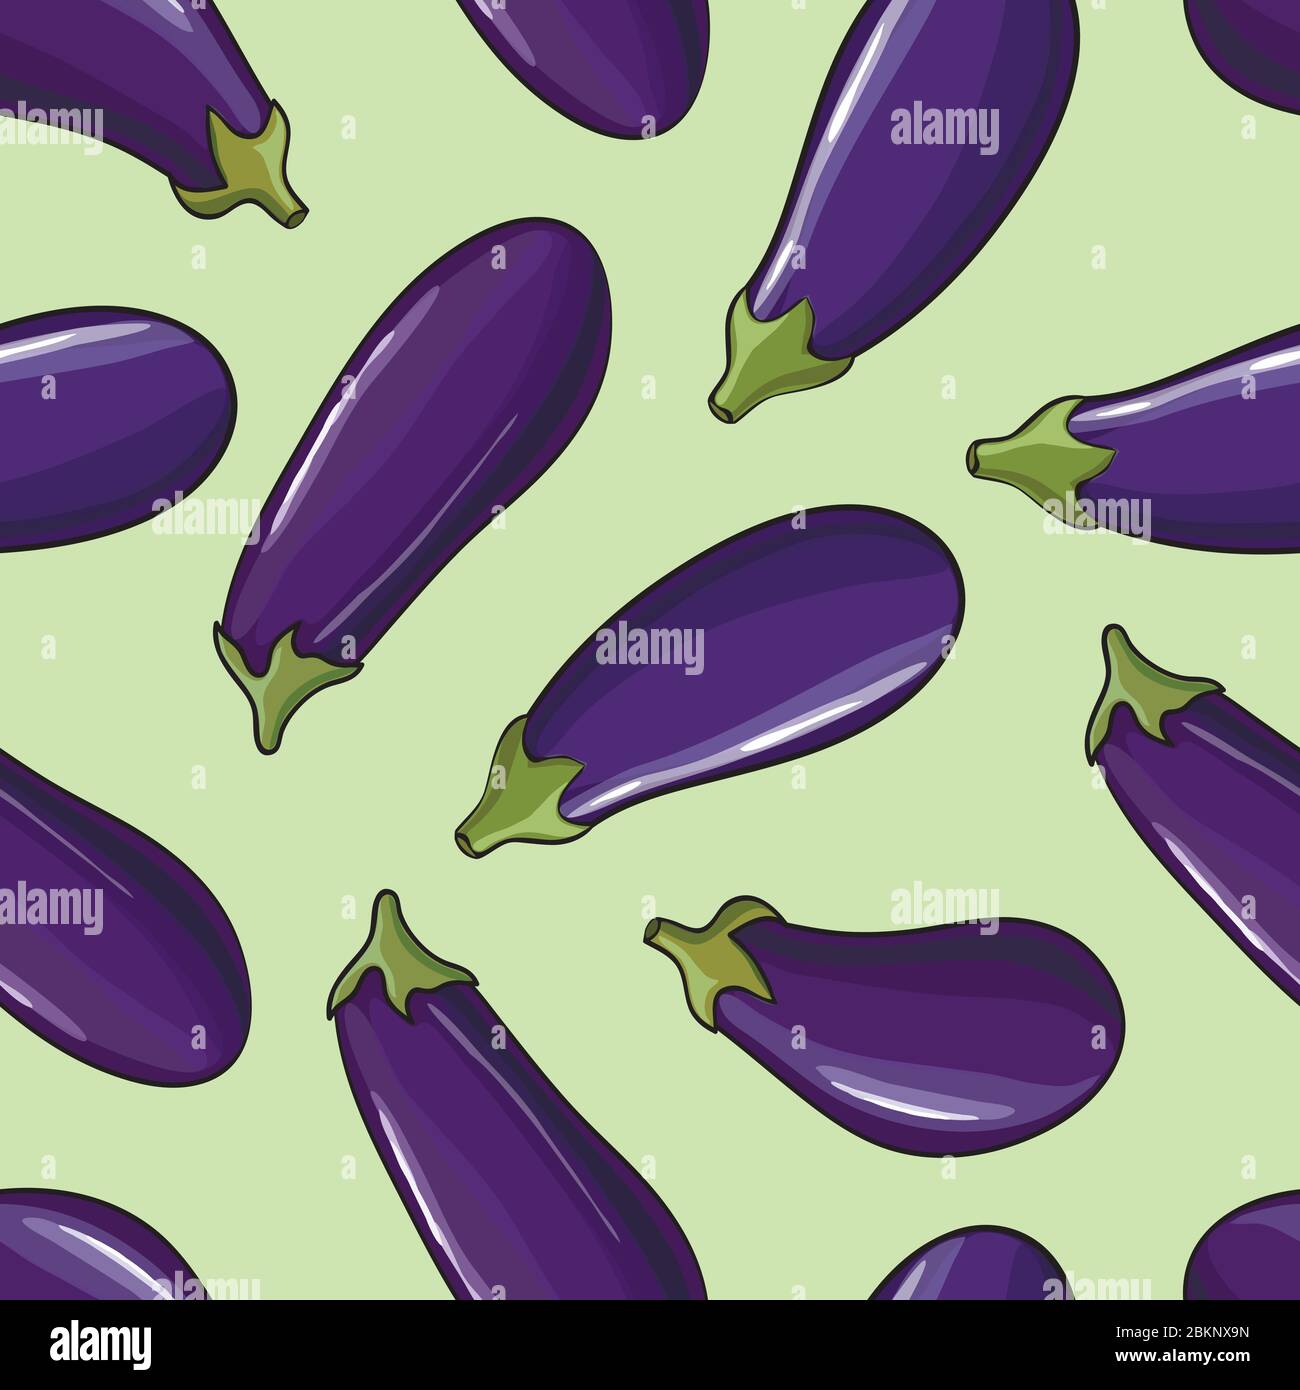 Eggplant Wallpaper Vector Images over 1400